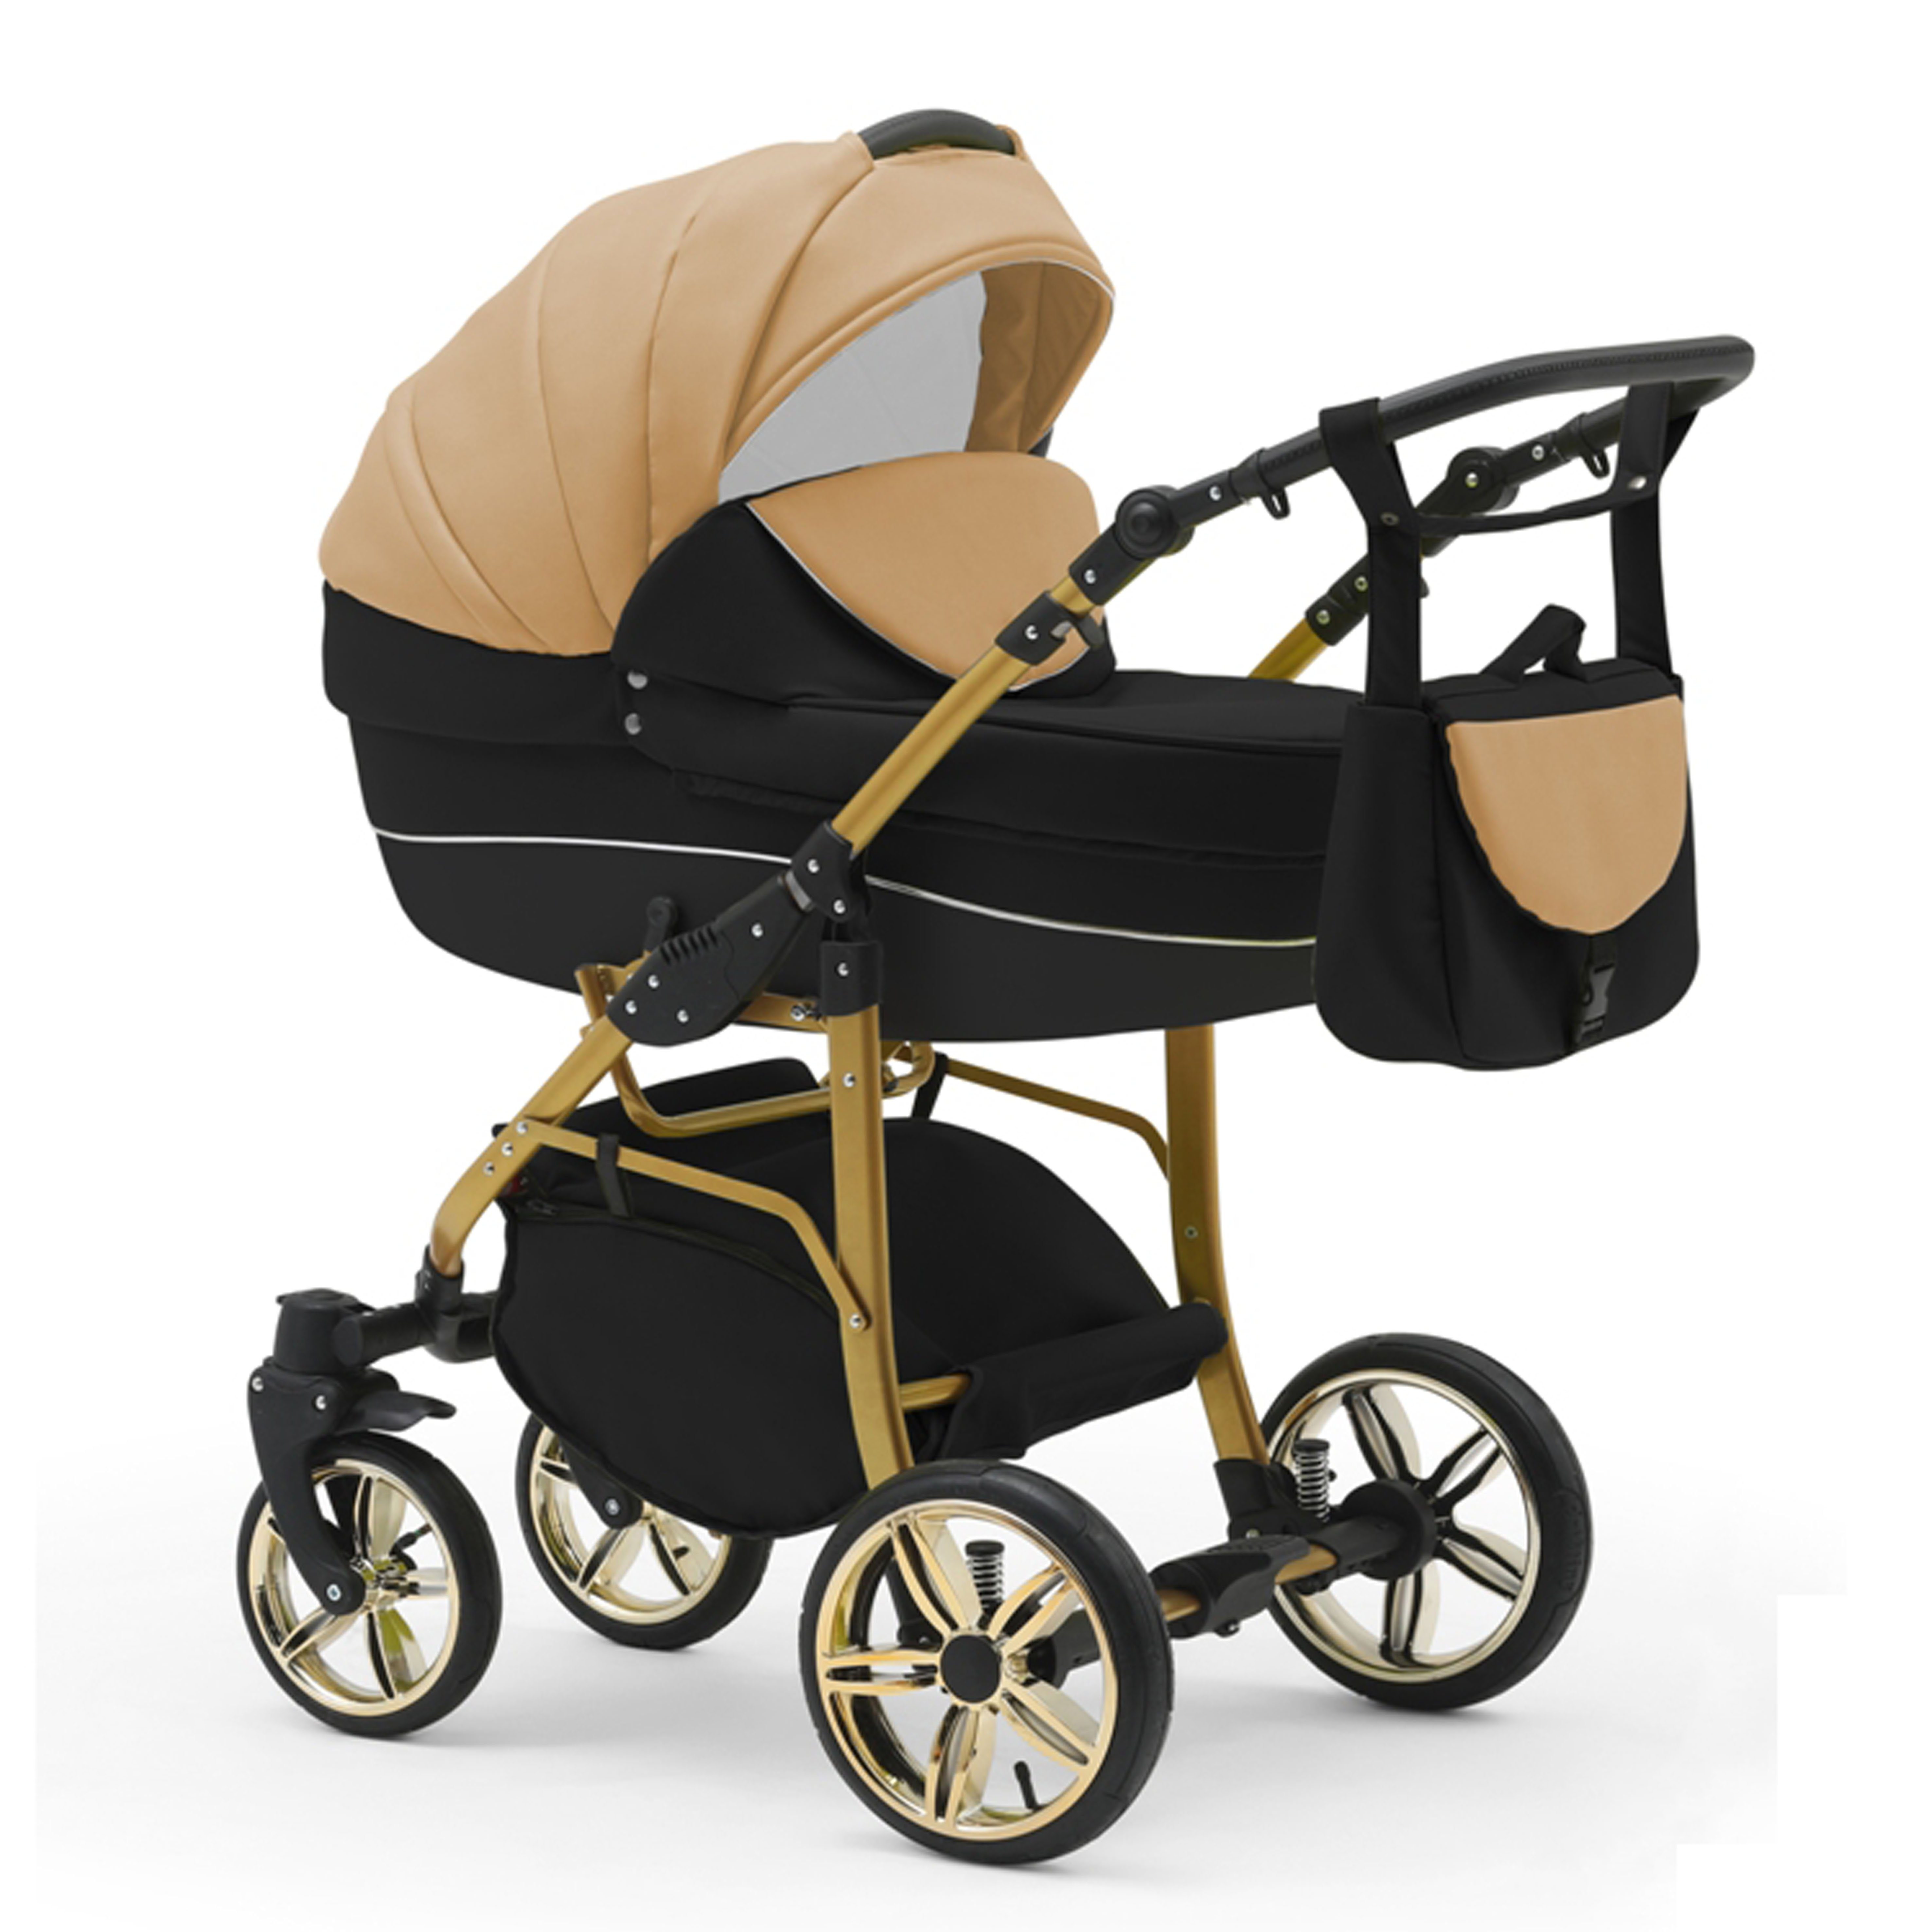 1 46 Gold Teile in in Beige-Schwarz Kombi-Kinderwagen - Farben Cosmo babies-on-wheels Kinderwagen-Set 2 13 -